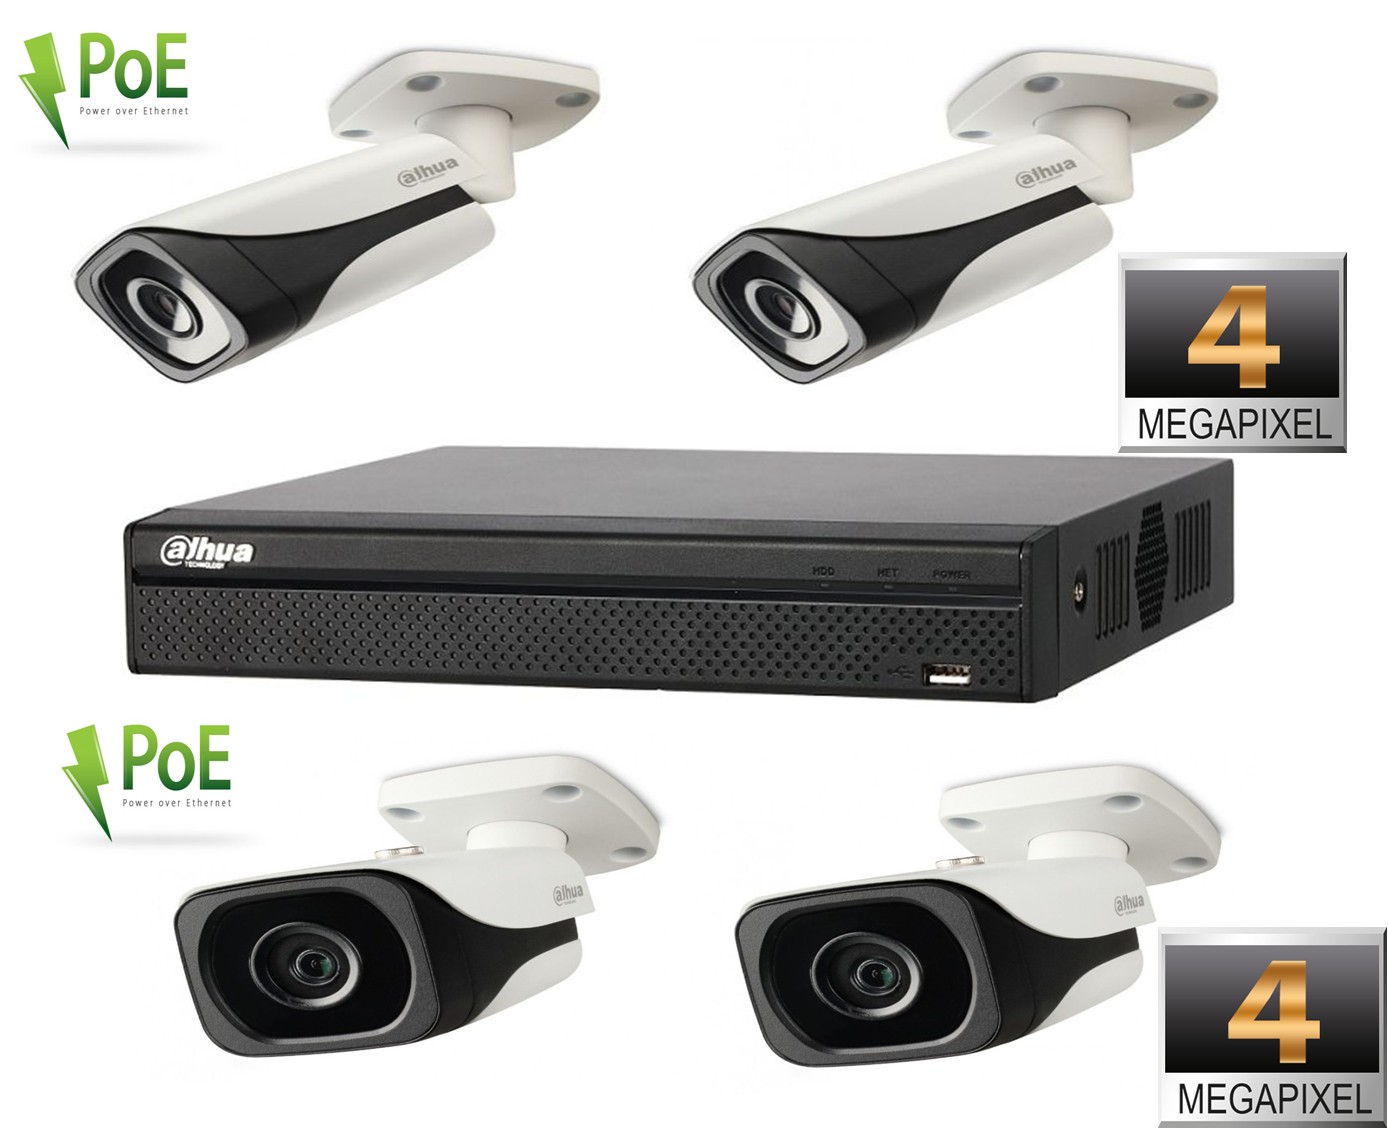 Kit profesional de video POE cu camere IP Dahua rezolutie 4MP IR 30m, NVR Dahua 4 canale 6MP - Rovision - Camere Supraveghere, Sisteme Alarma, Video Interfoane